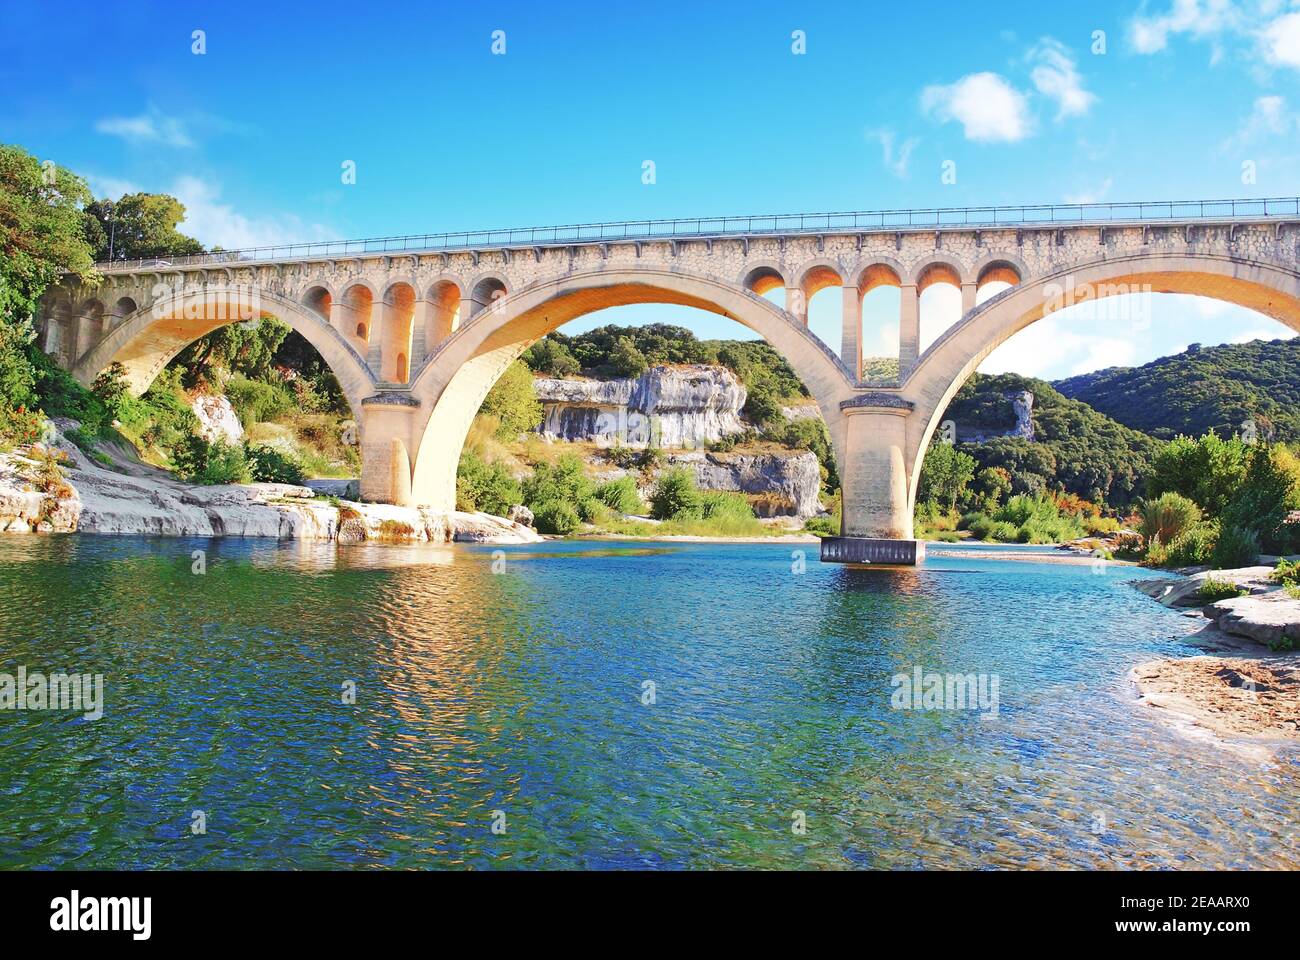 Architecture of the Collias bridge on the Gard river in Occitanie France. Stock Photo